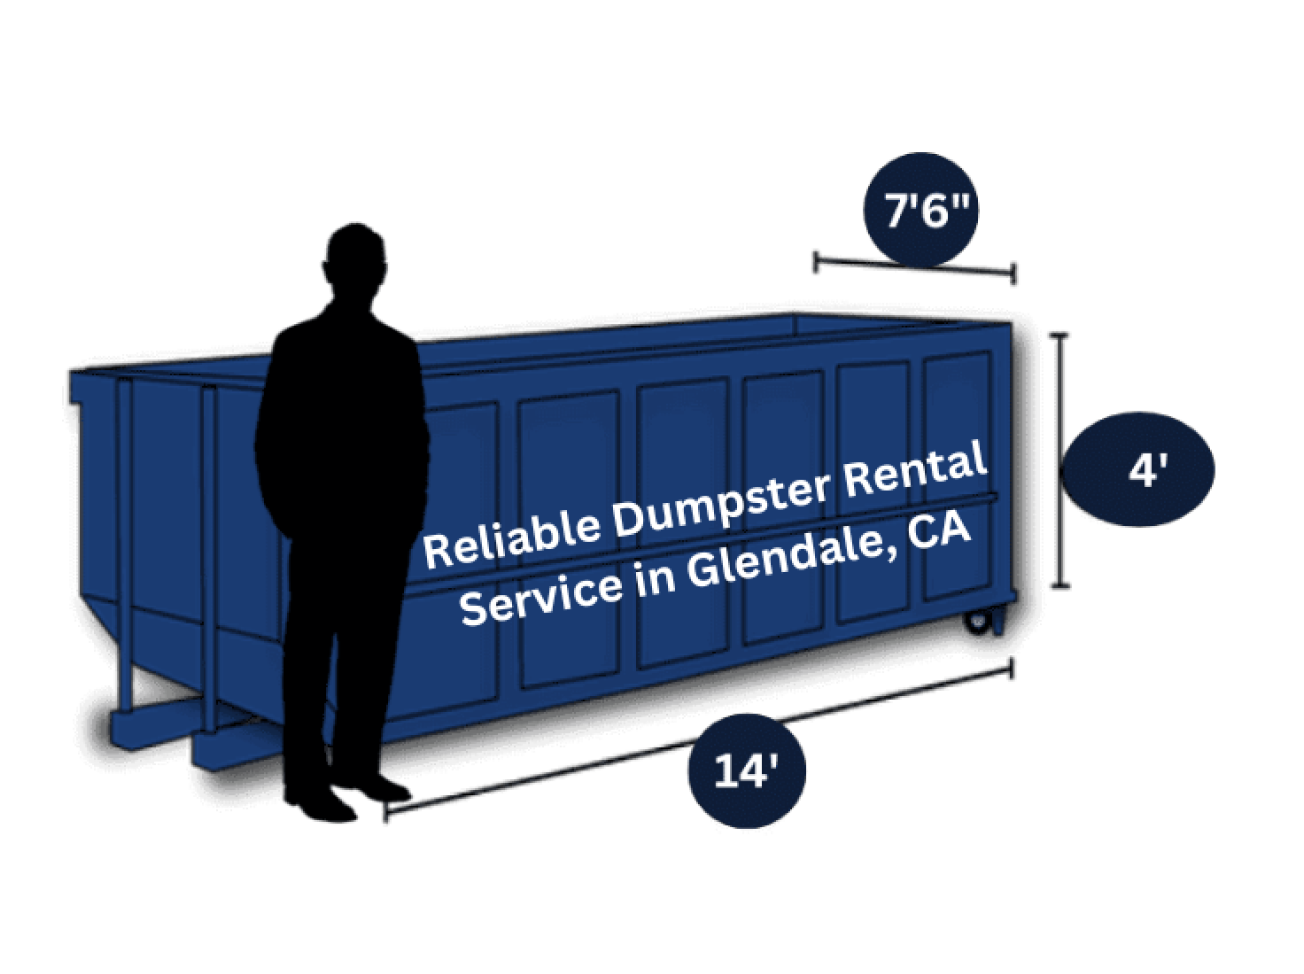 Dumpster Rental Service in Glendale, CA